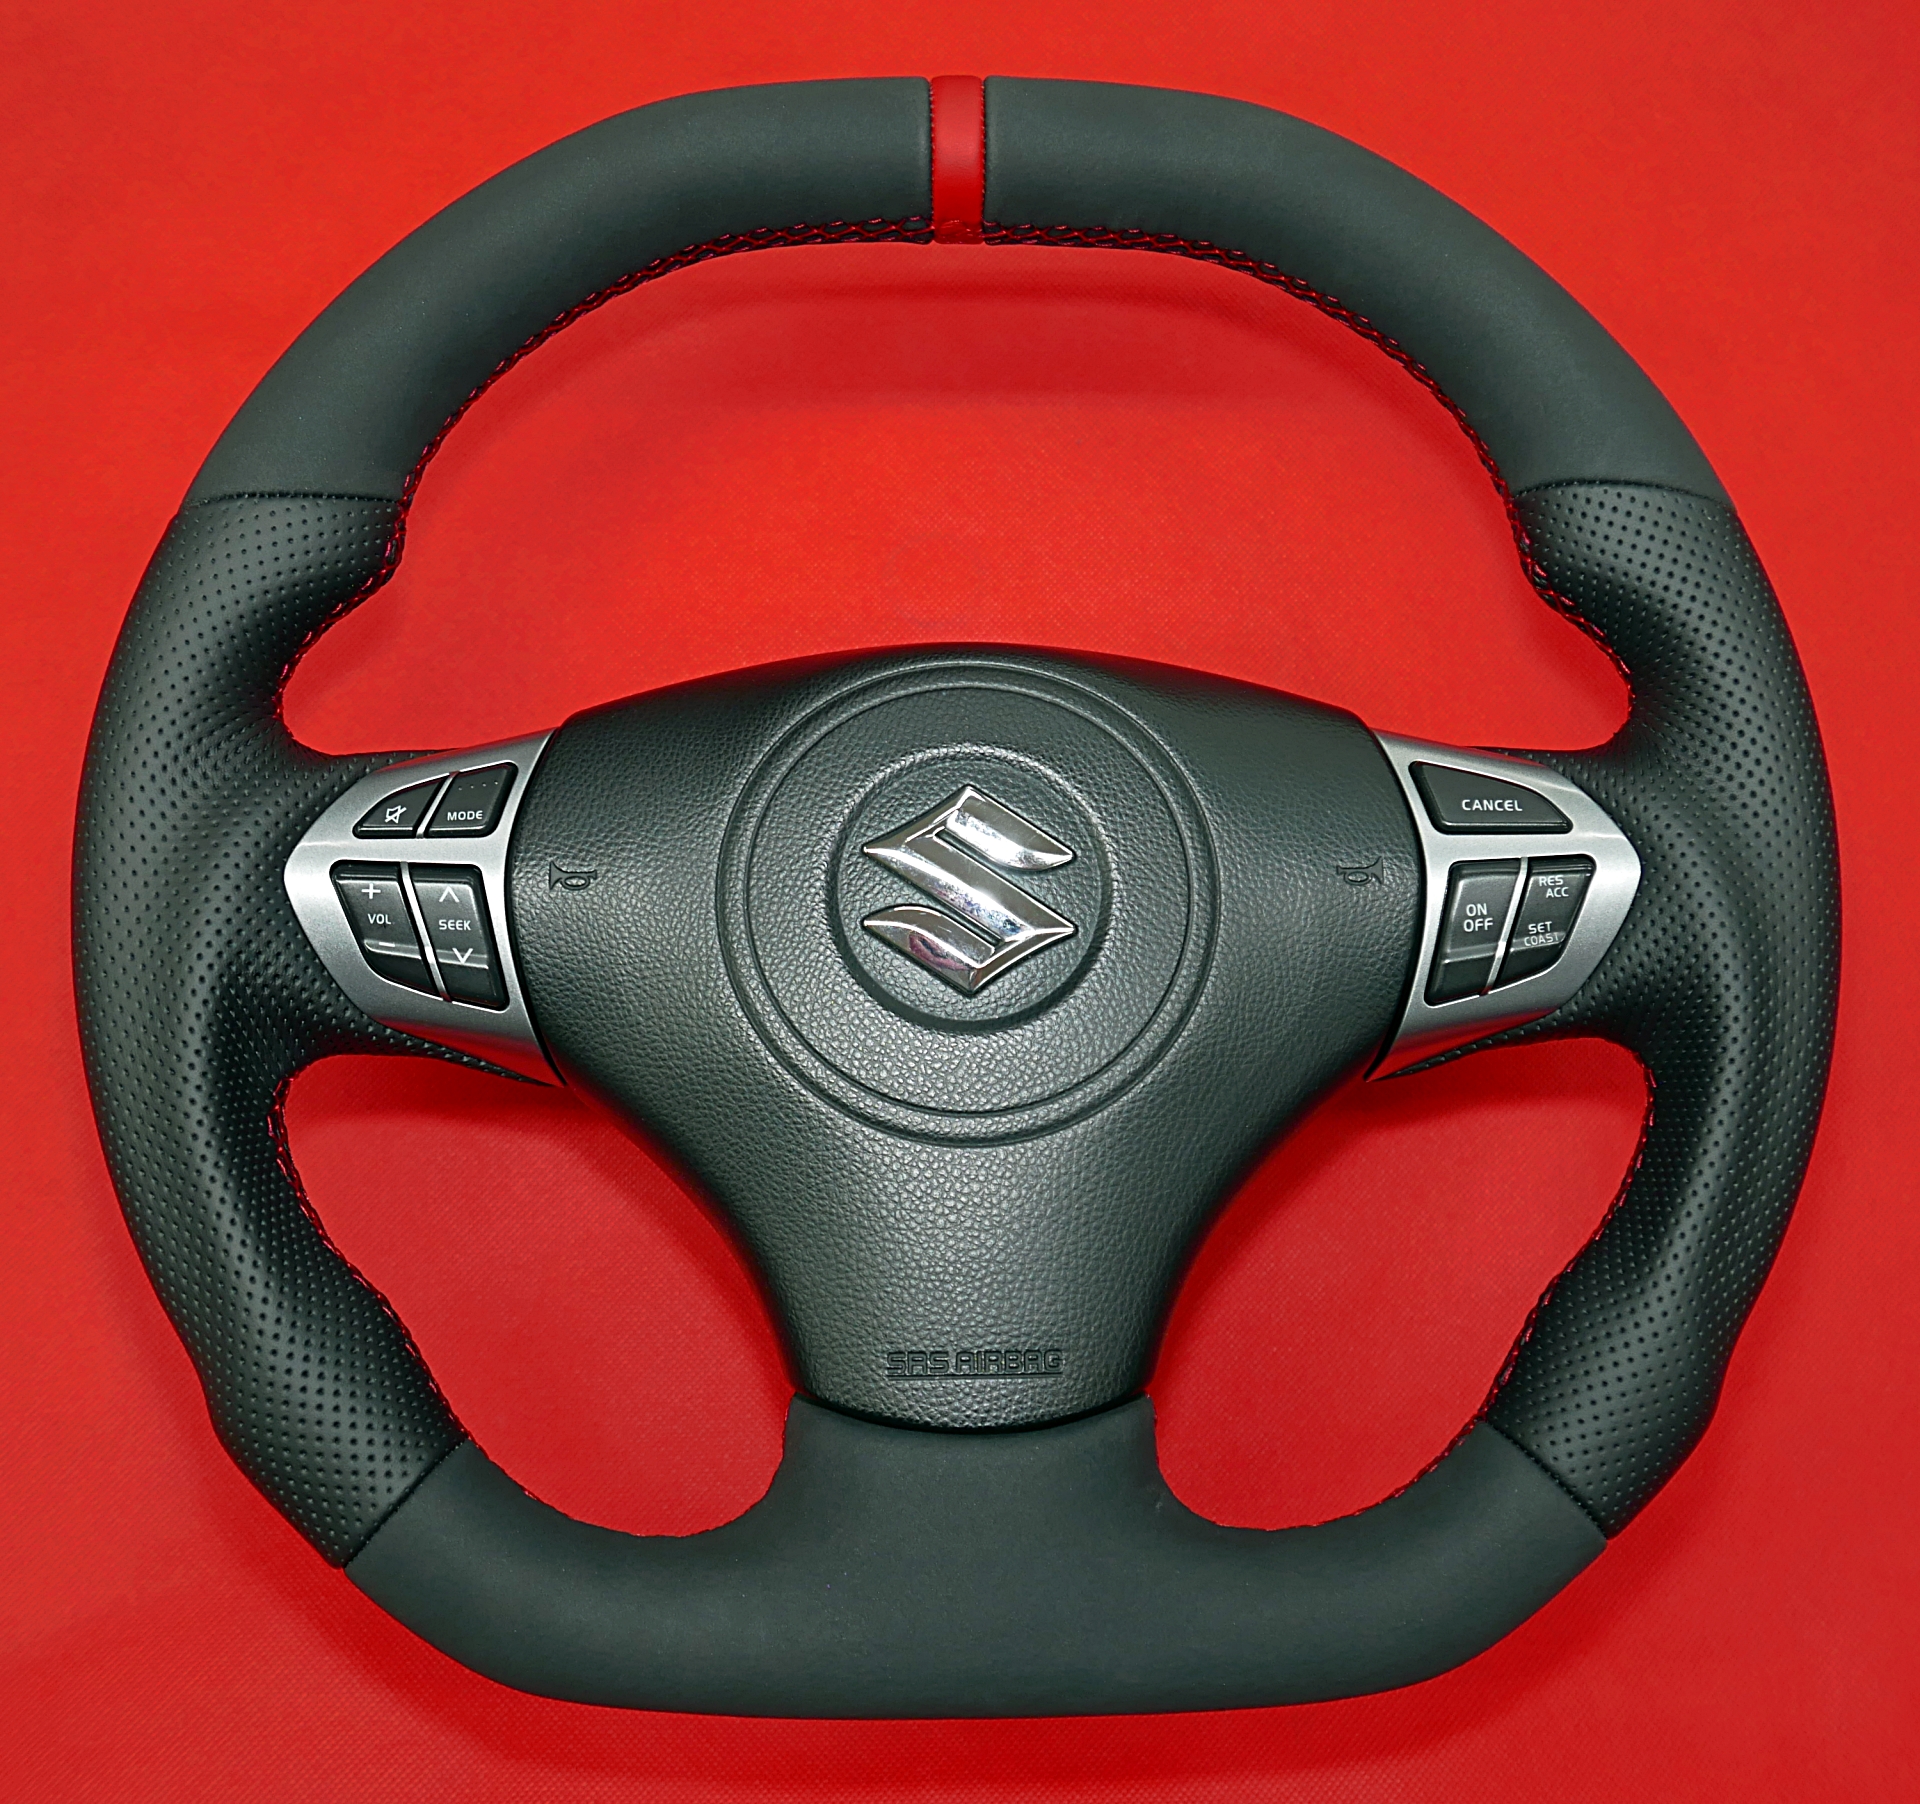 Steering wheel Suzuki tuning custom modded